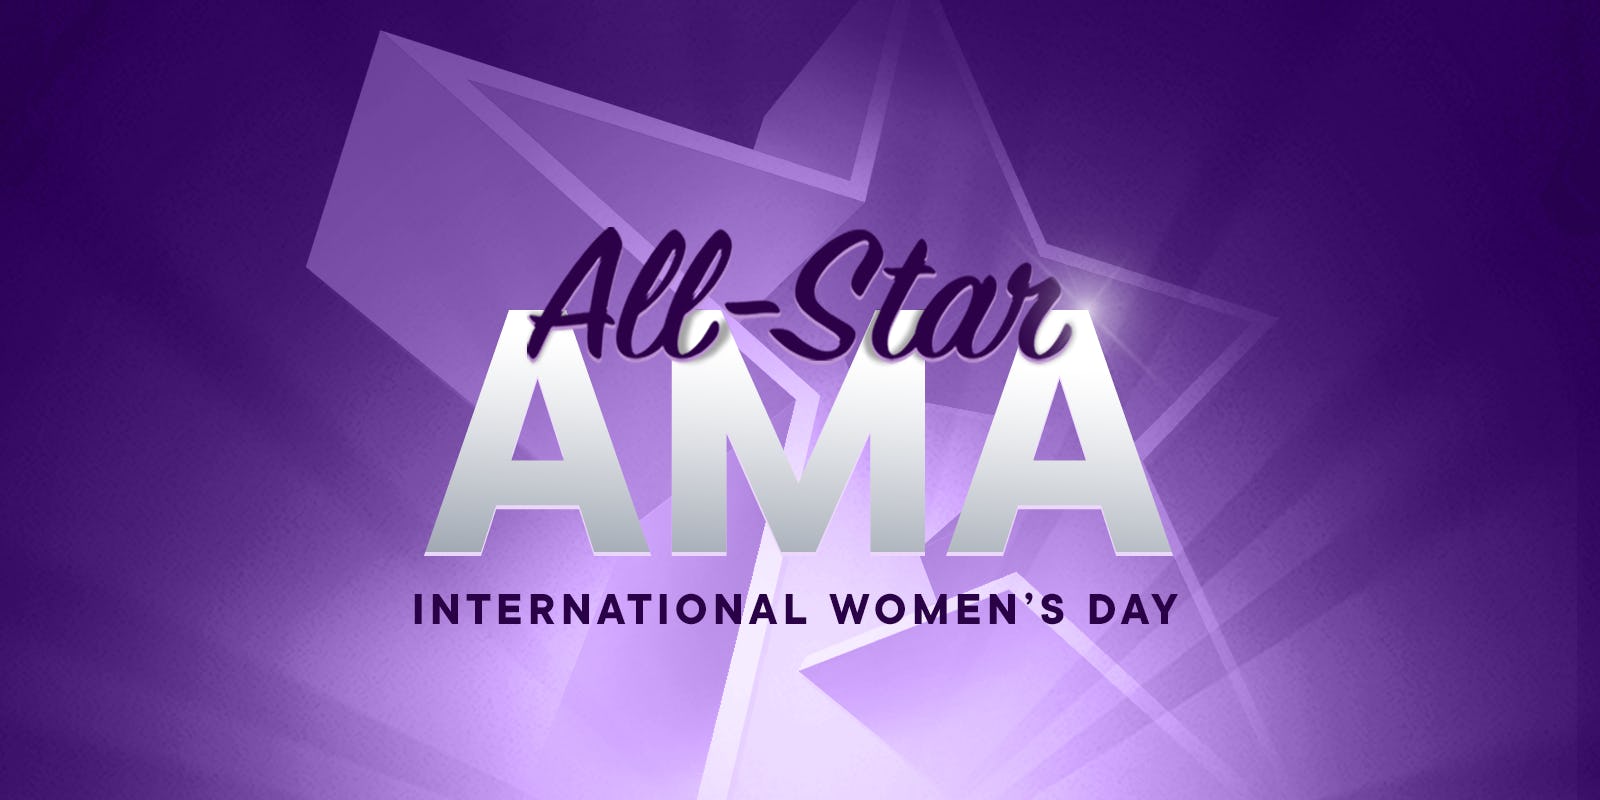 International Women’s Day All-Star AMA